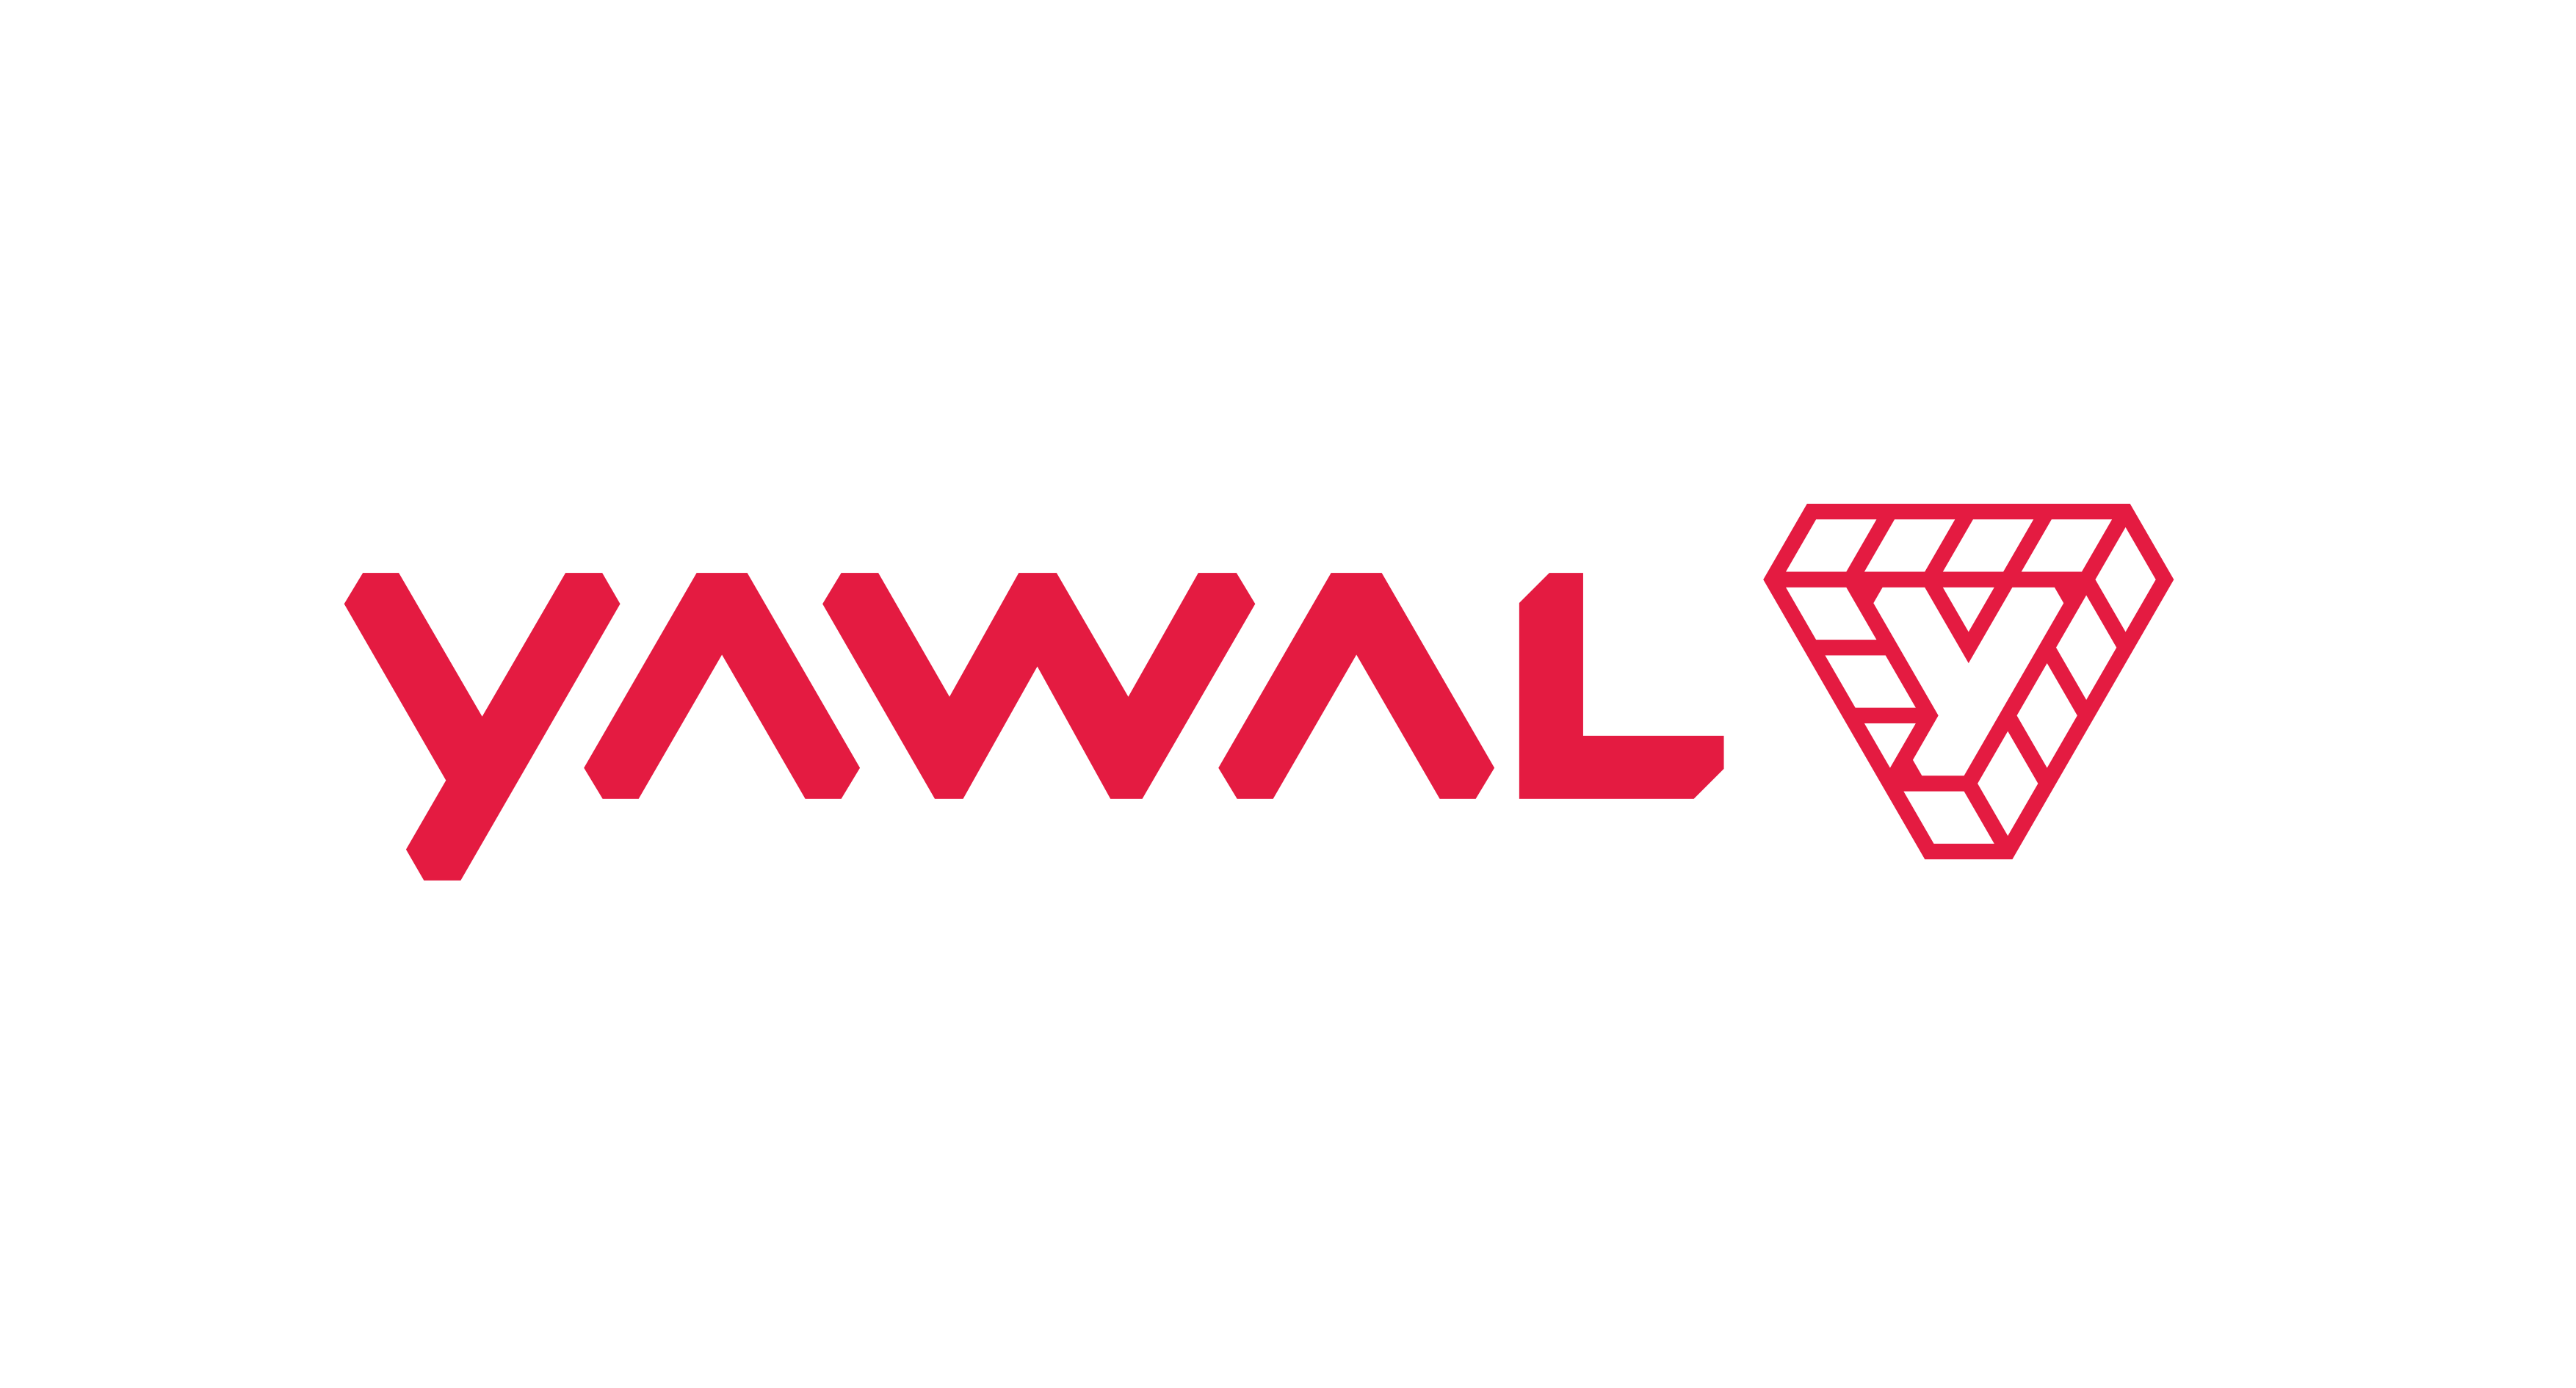 logo yawal